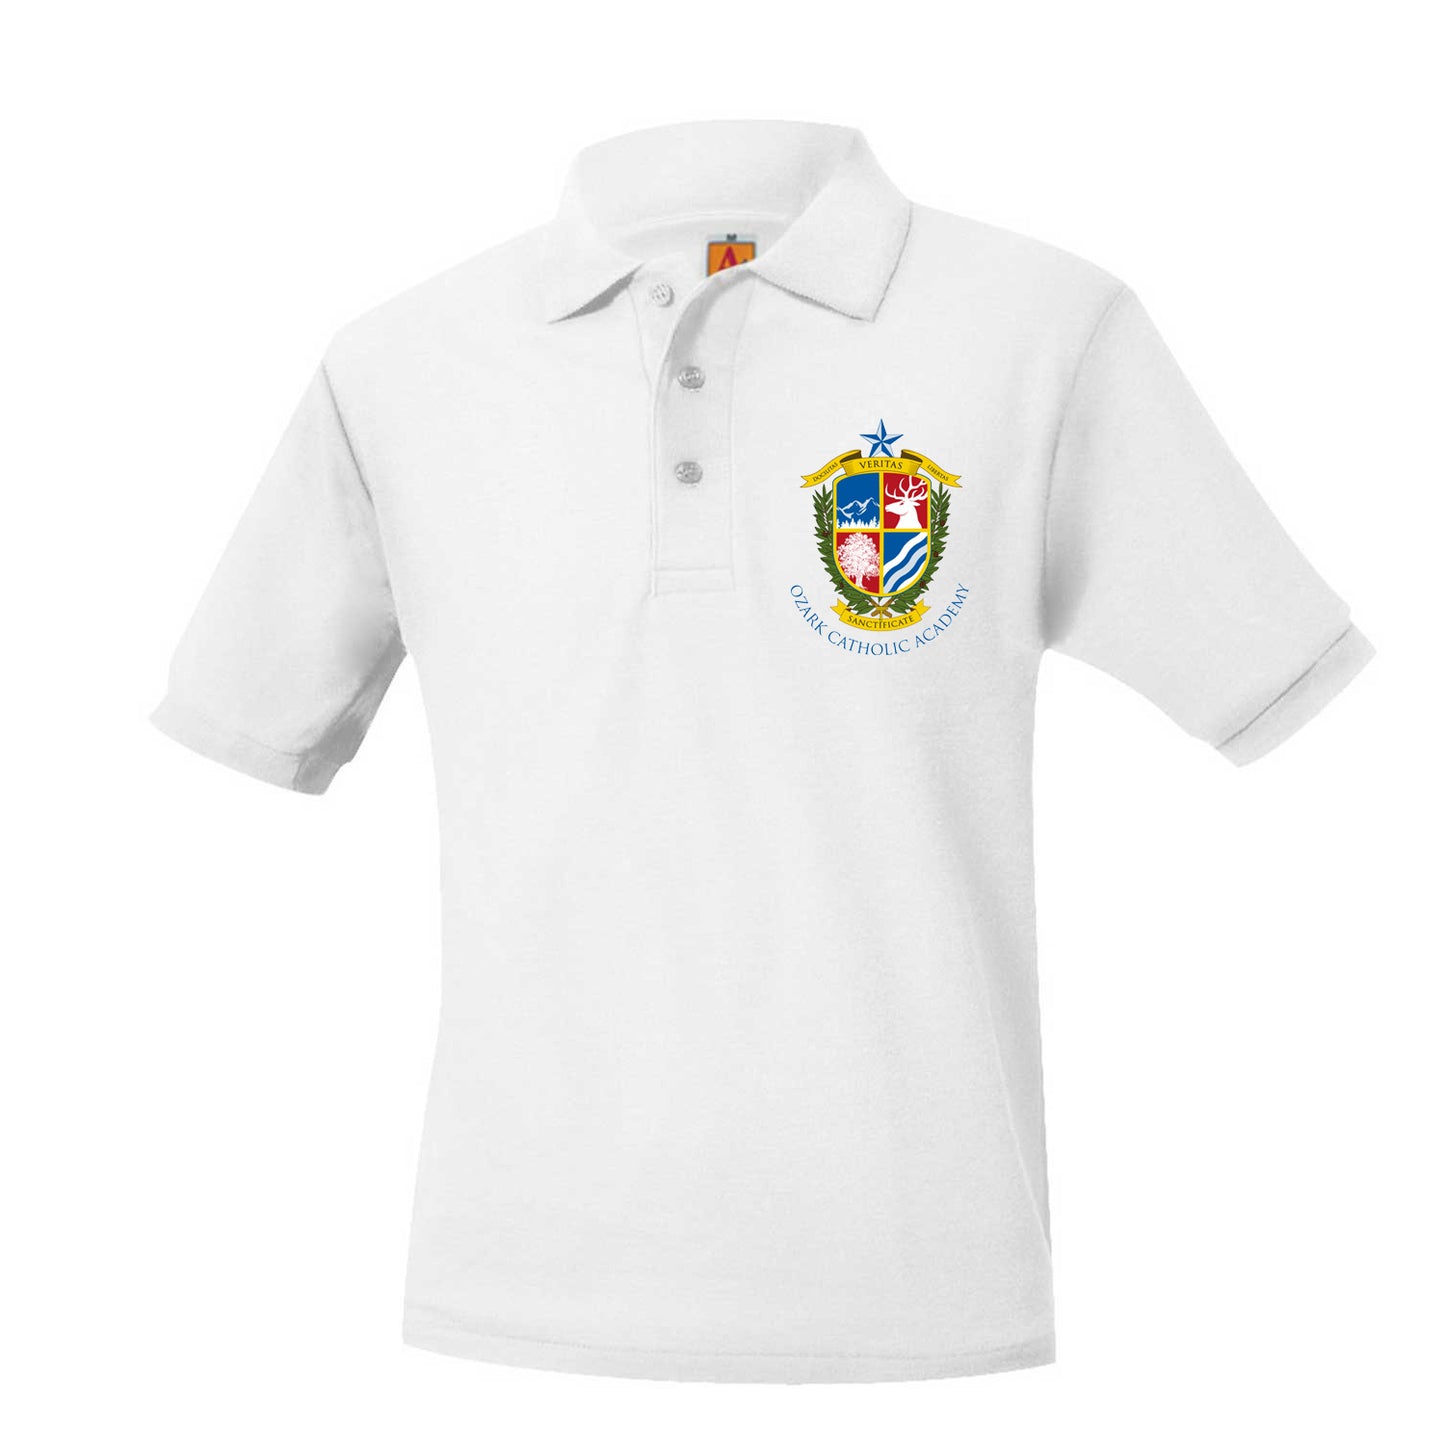 Adult Short Sleeve Pique Polo with Ozark Catholic Academy Logo